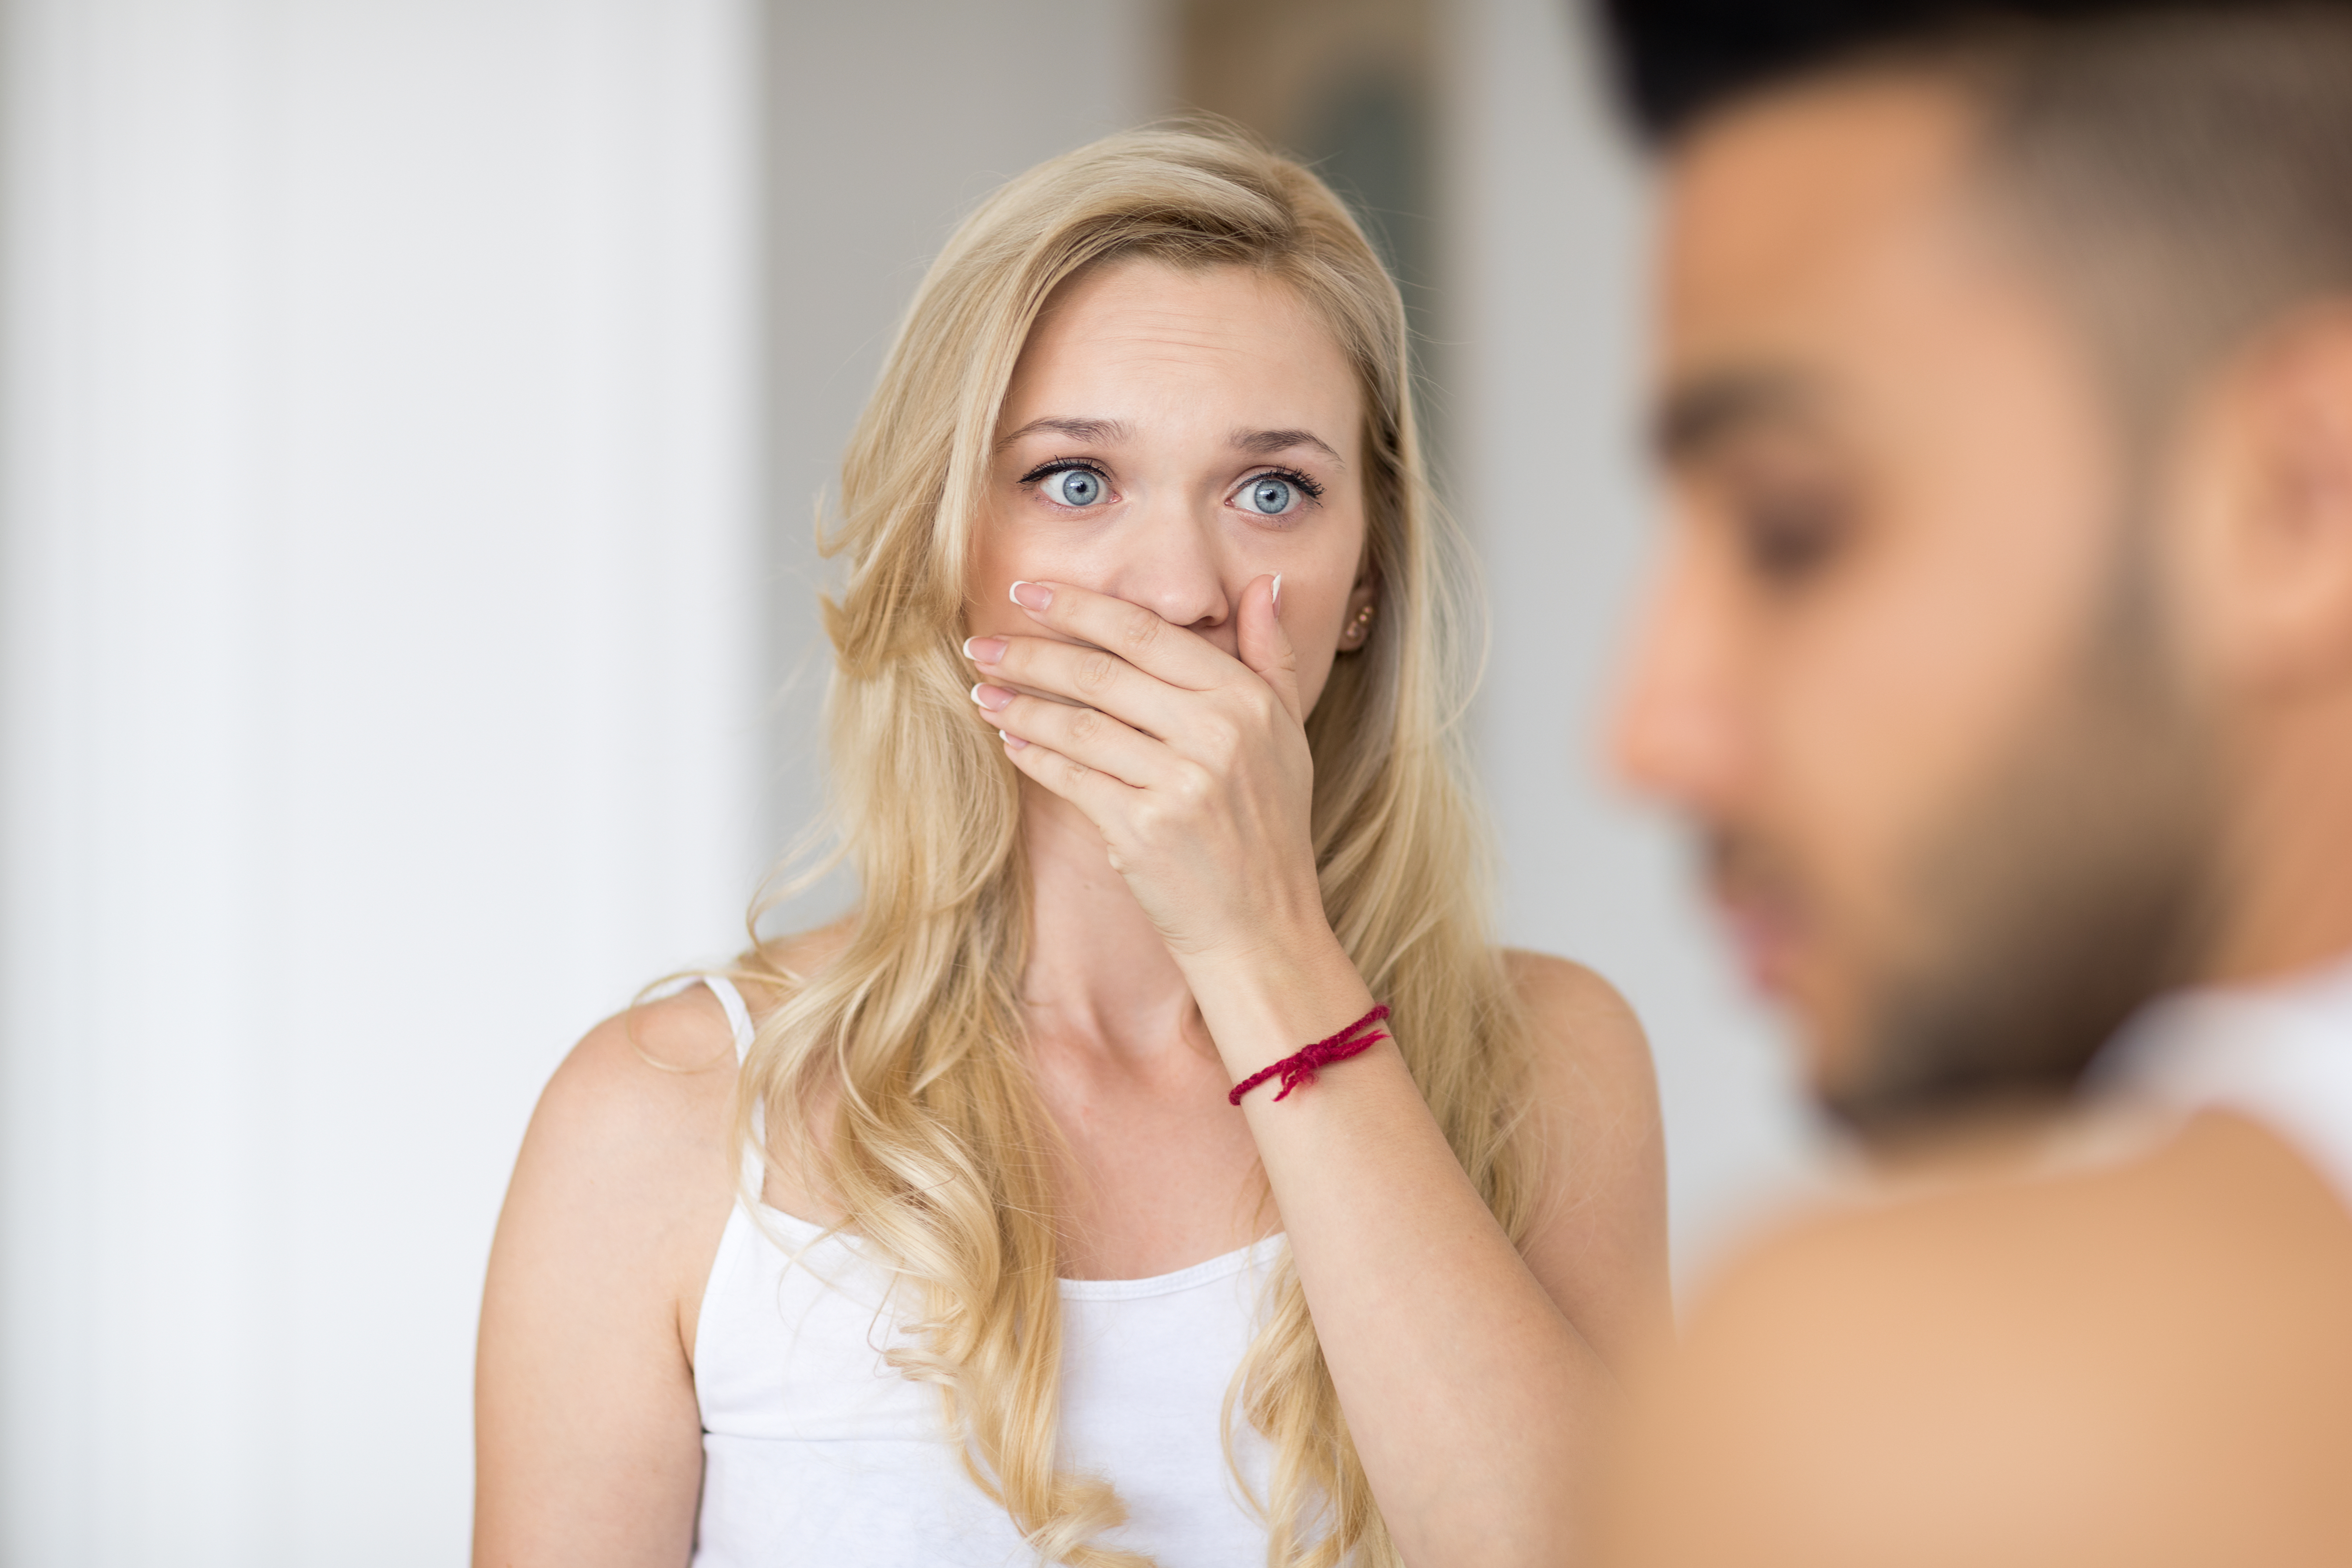 Une femme choquée regardant un homme | Source : Shutterstock